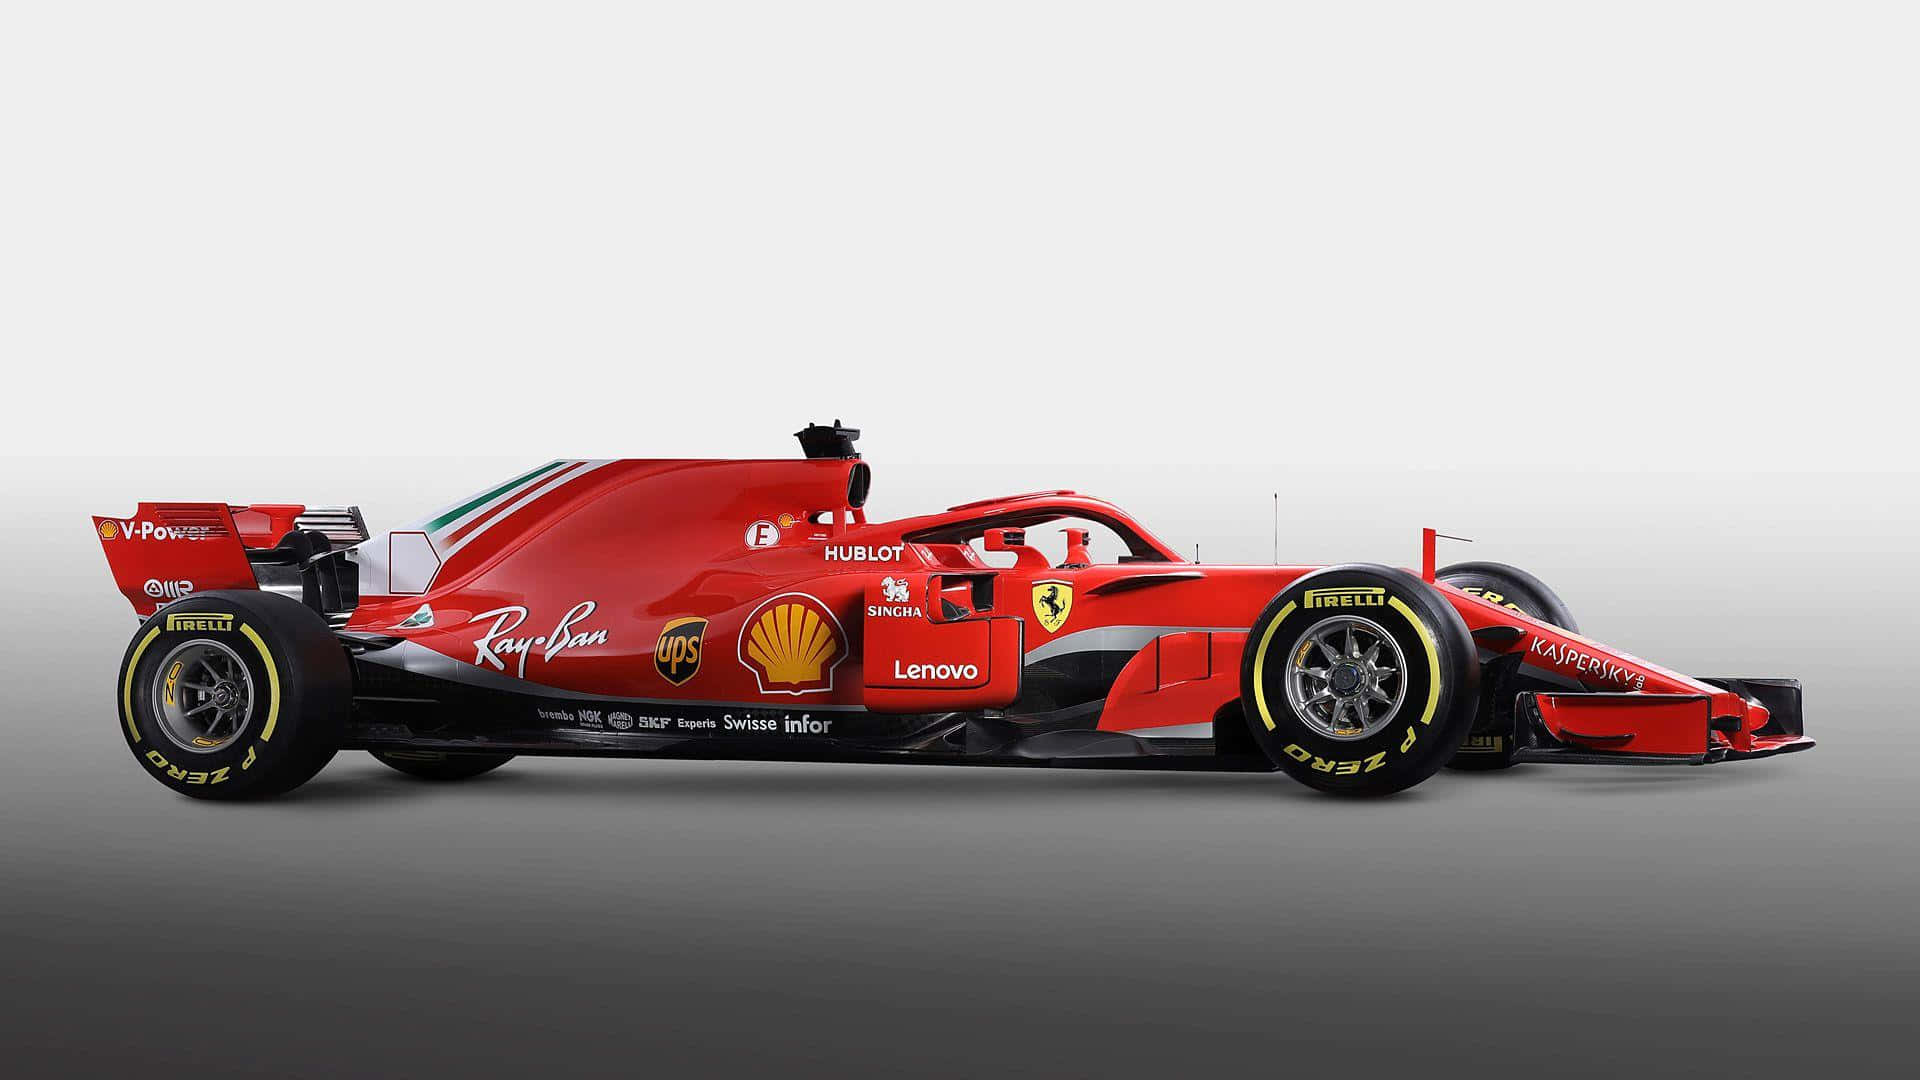 Ferrarisf71h Sidovy F1 2018 Bakgrundsbild.